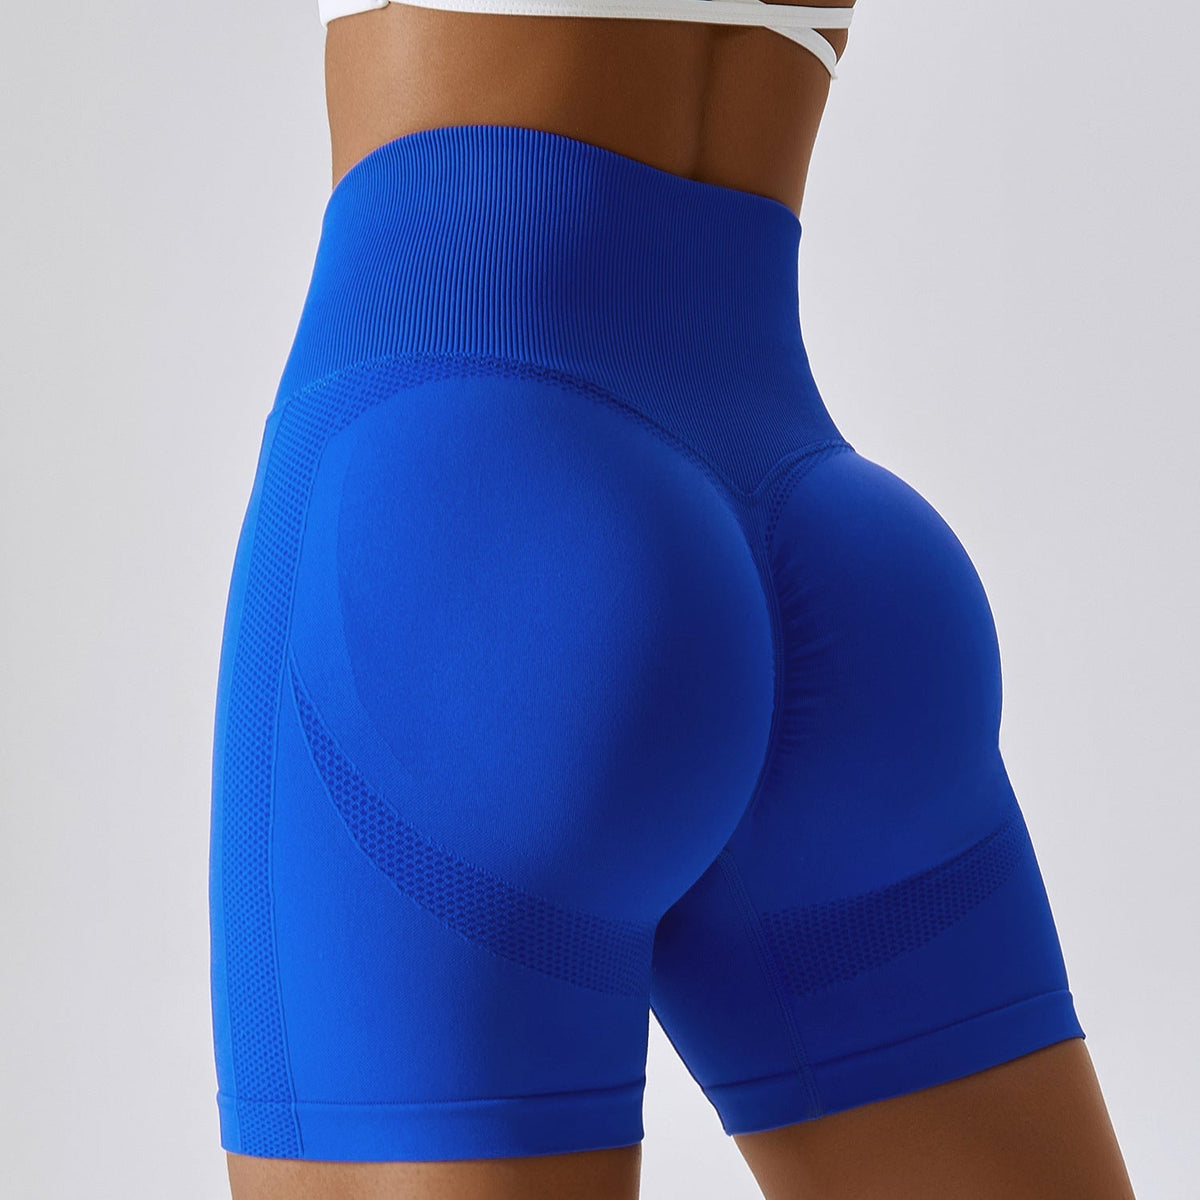 Women Hip Lift Sports Short Panty